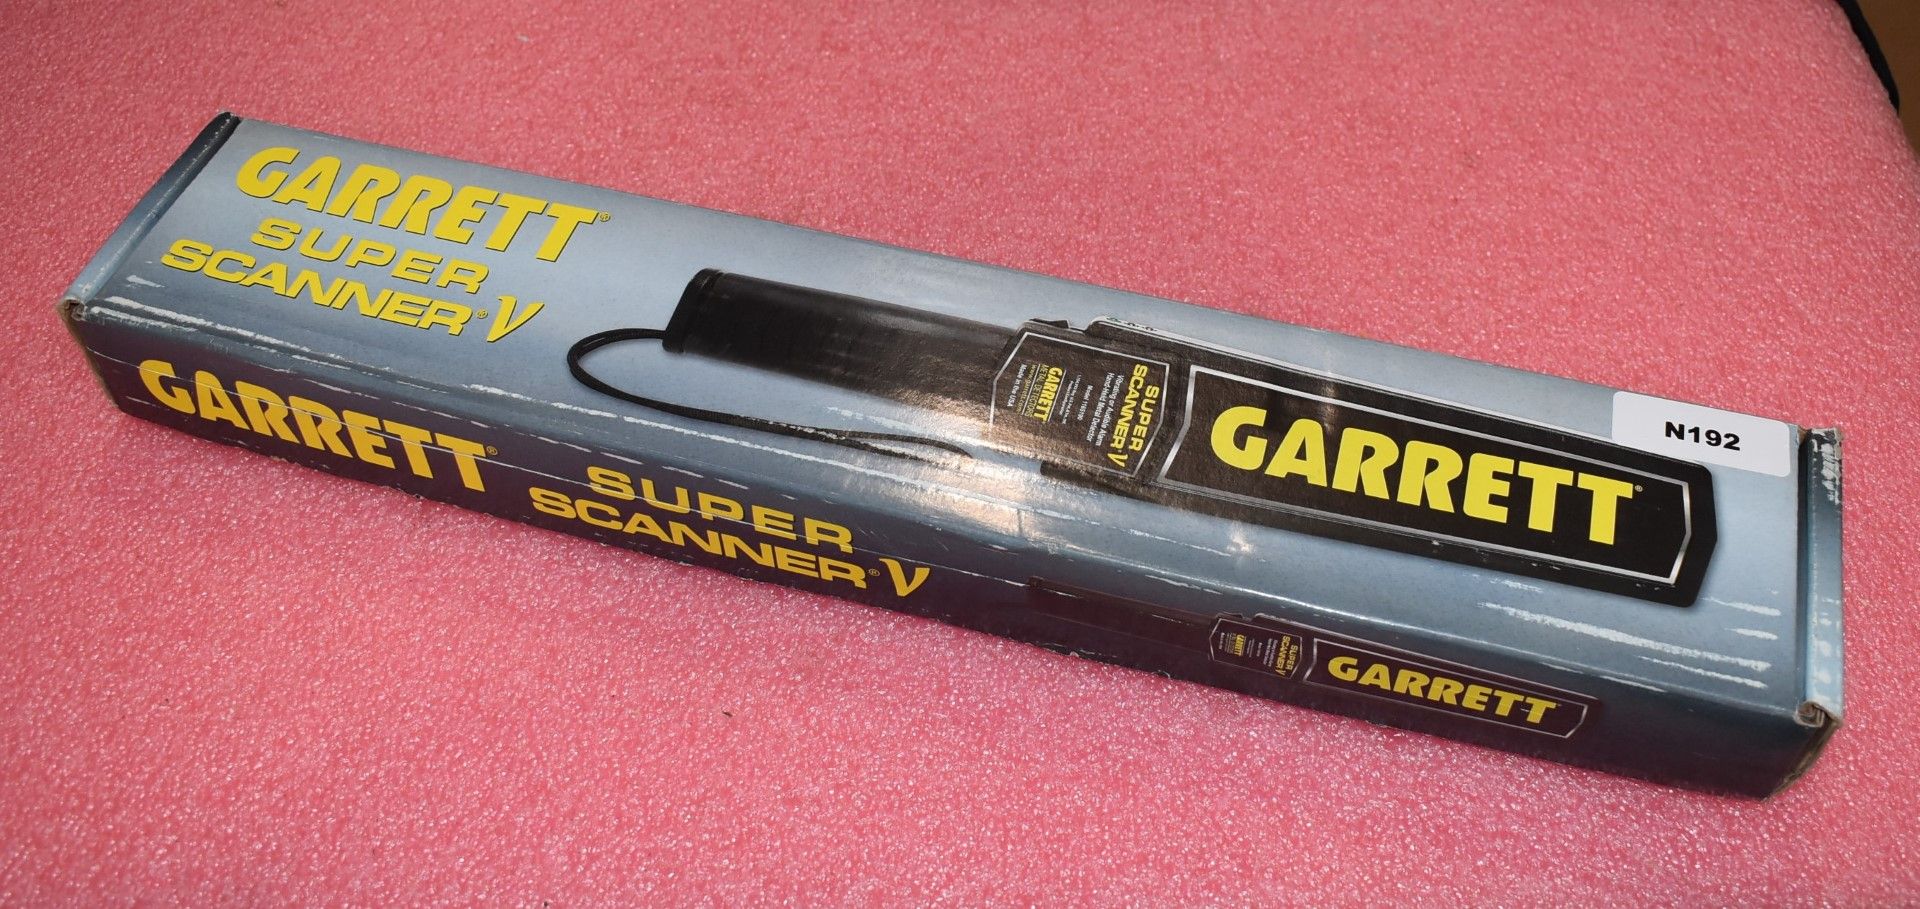 1 x Garrett Super Scanner V Vibrating Audible Hand Held Metal Detector - Unused With Original